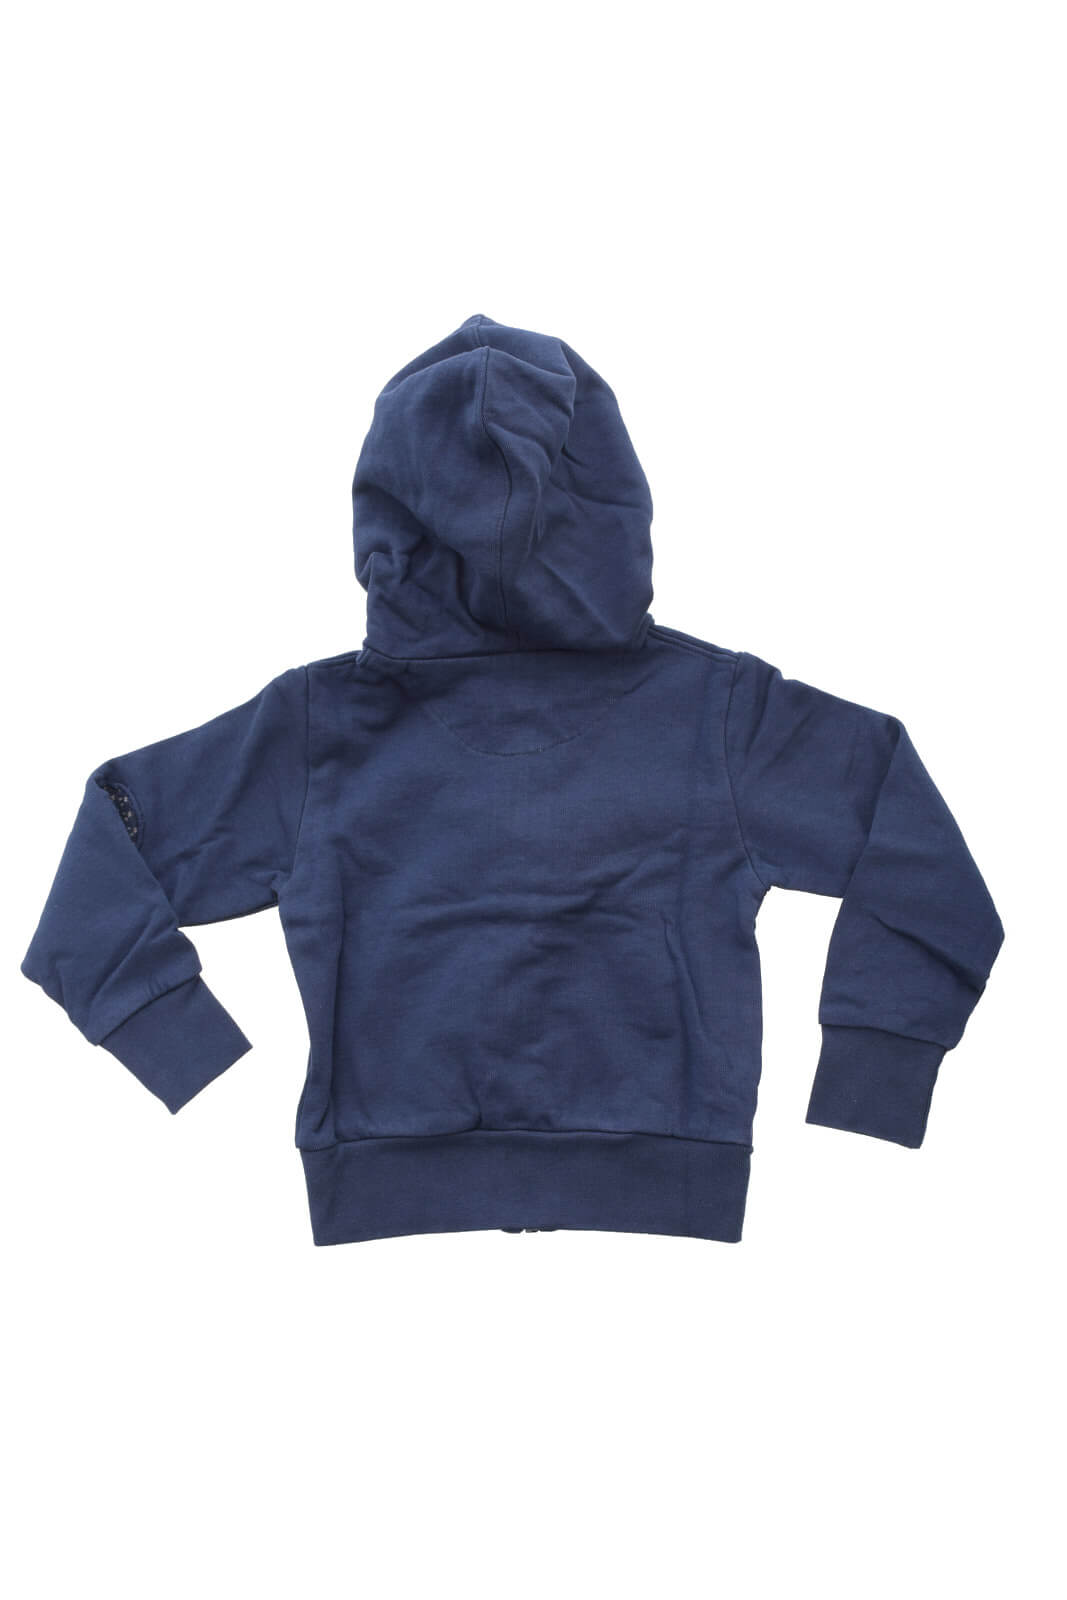 Manuel Ritz Child Sweatshirt with hood